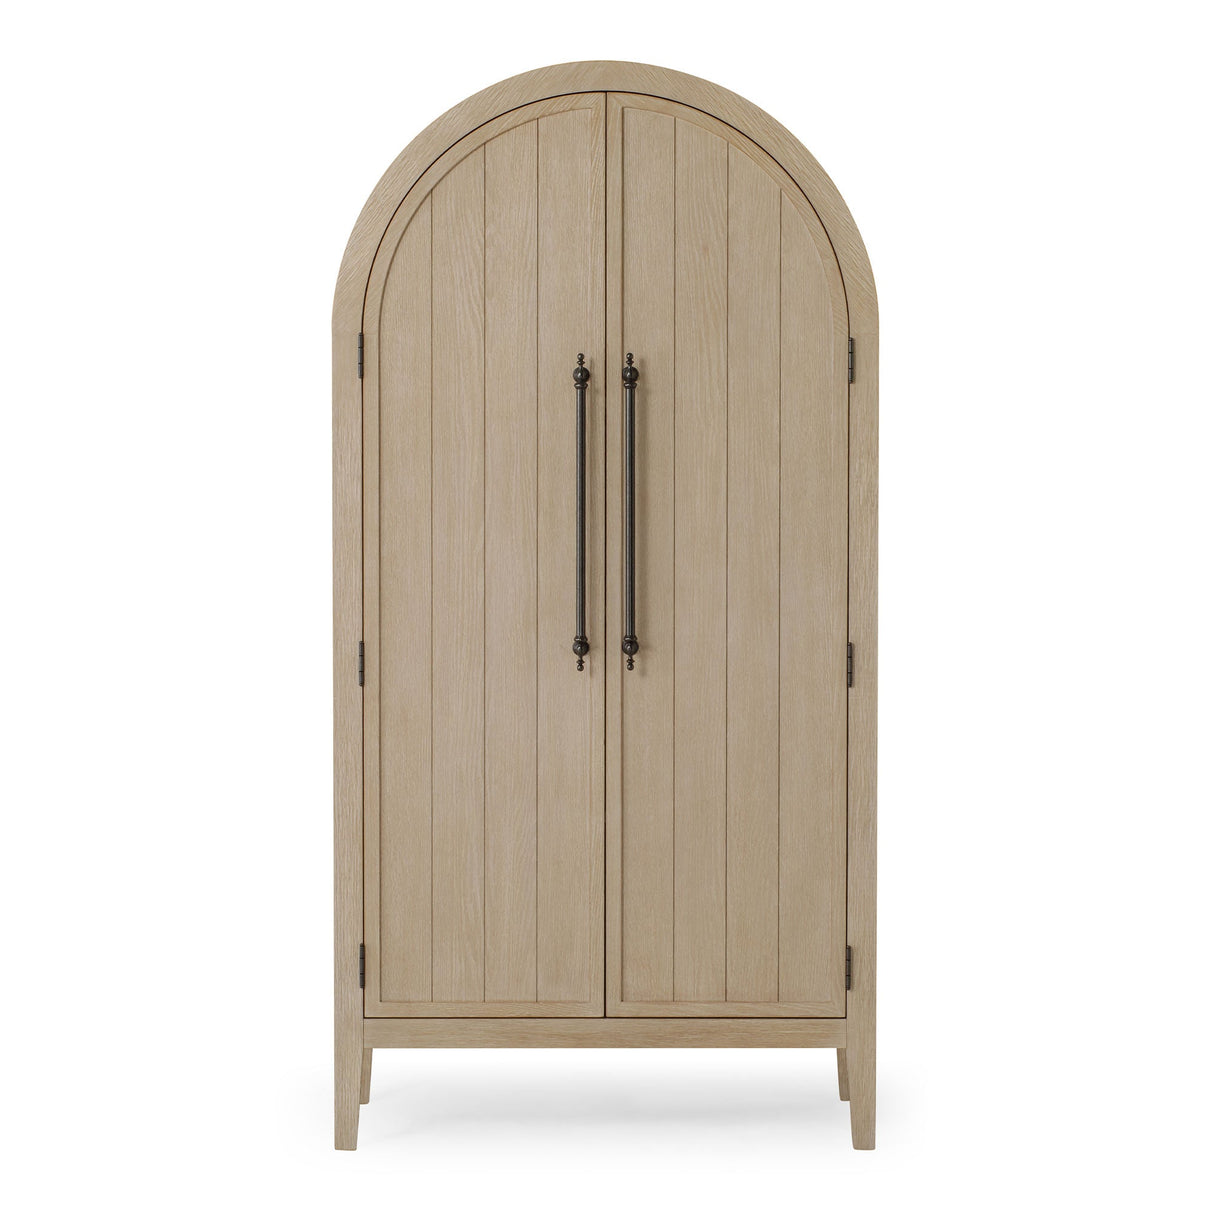 Maven Lane Selene Classical Wooden Cabinet in Antiqued White Finish